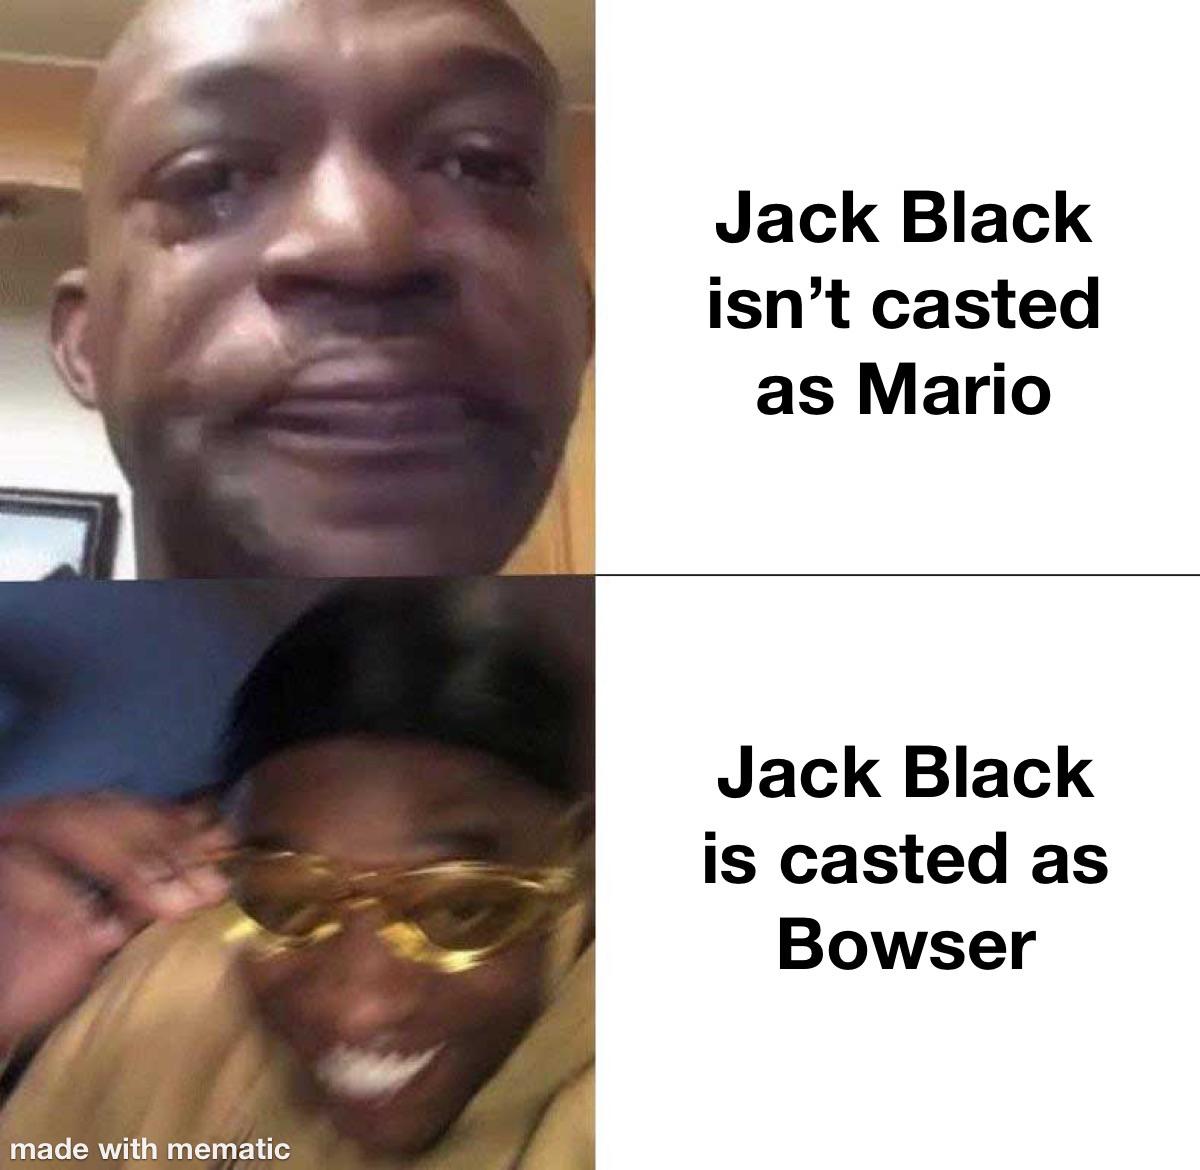 Jack Black Memes - jack black browser - made with mematic Jack Black isn't casted as Mario Jack Black is casted as Bowser